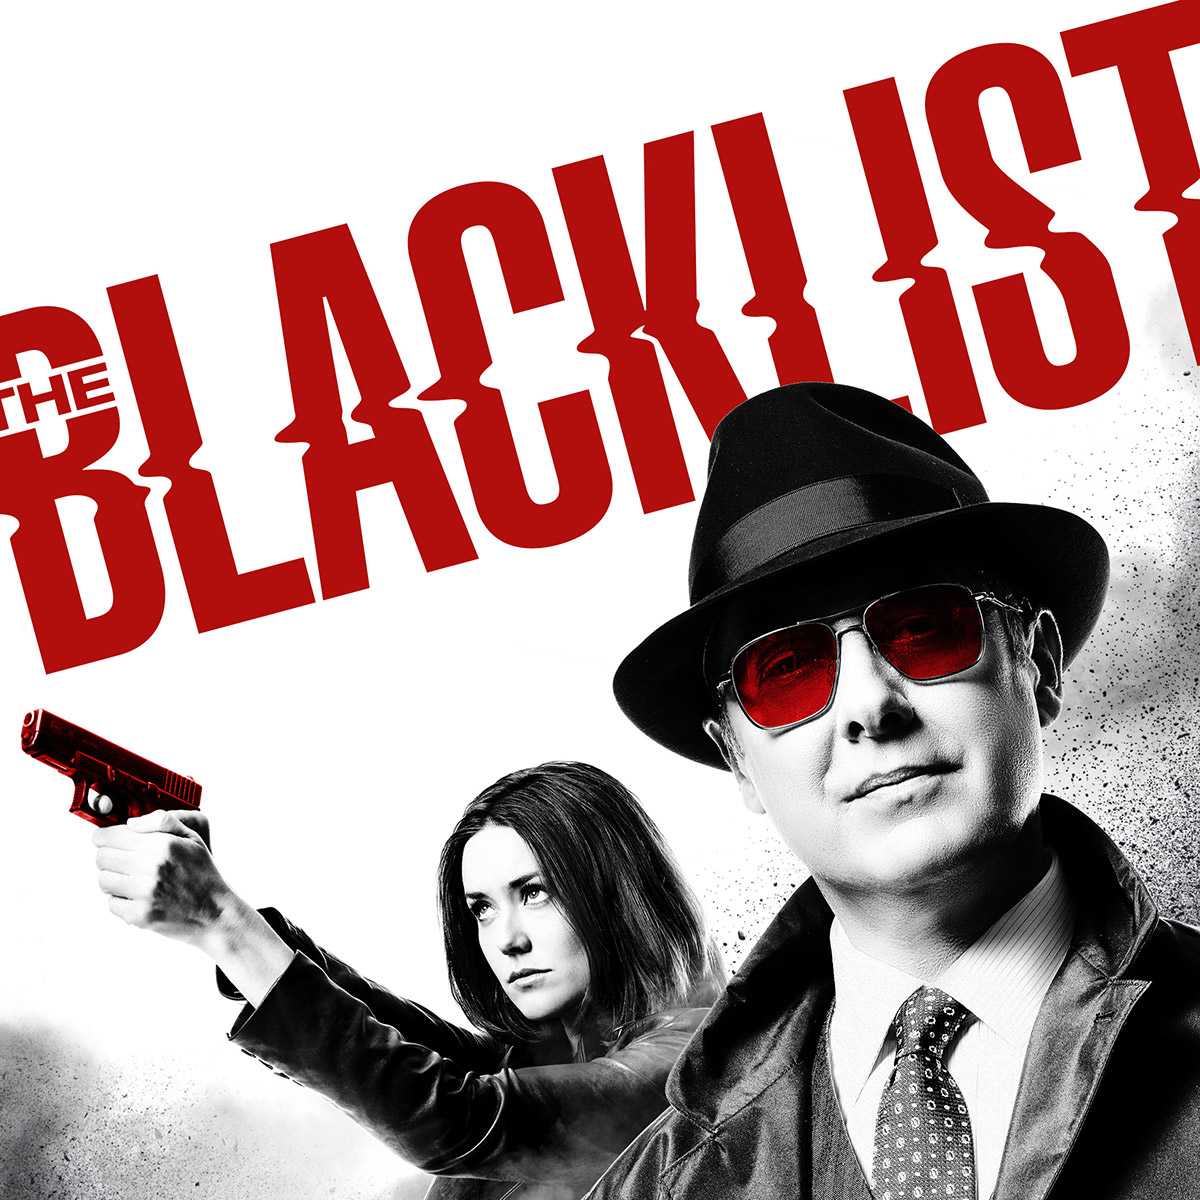 The-Blacklist-Season-3-Artwork-NBC-TV-series